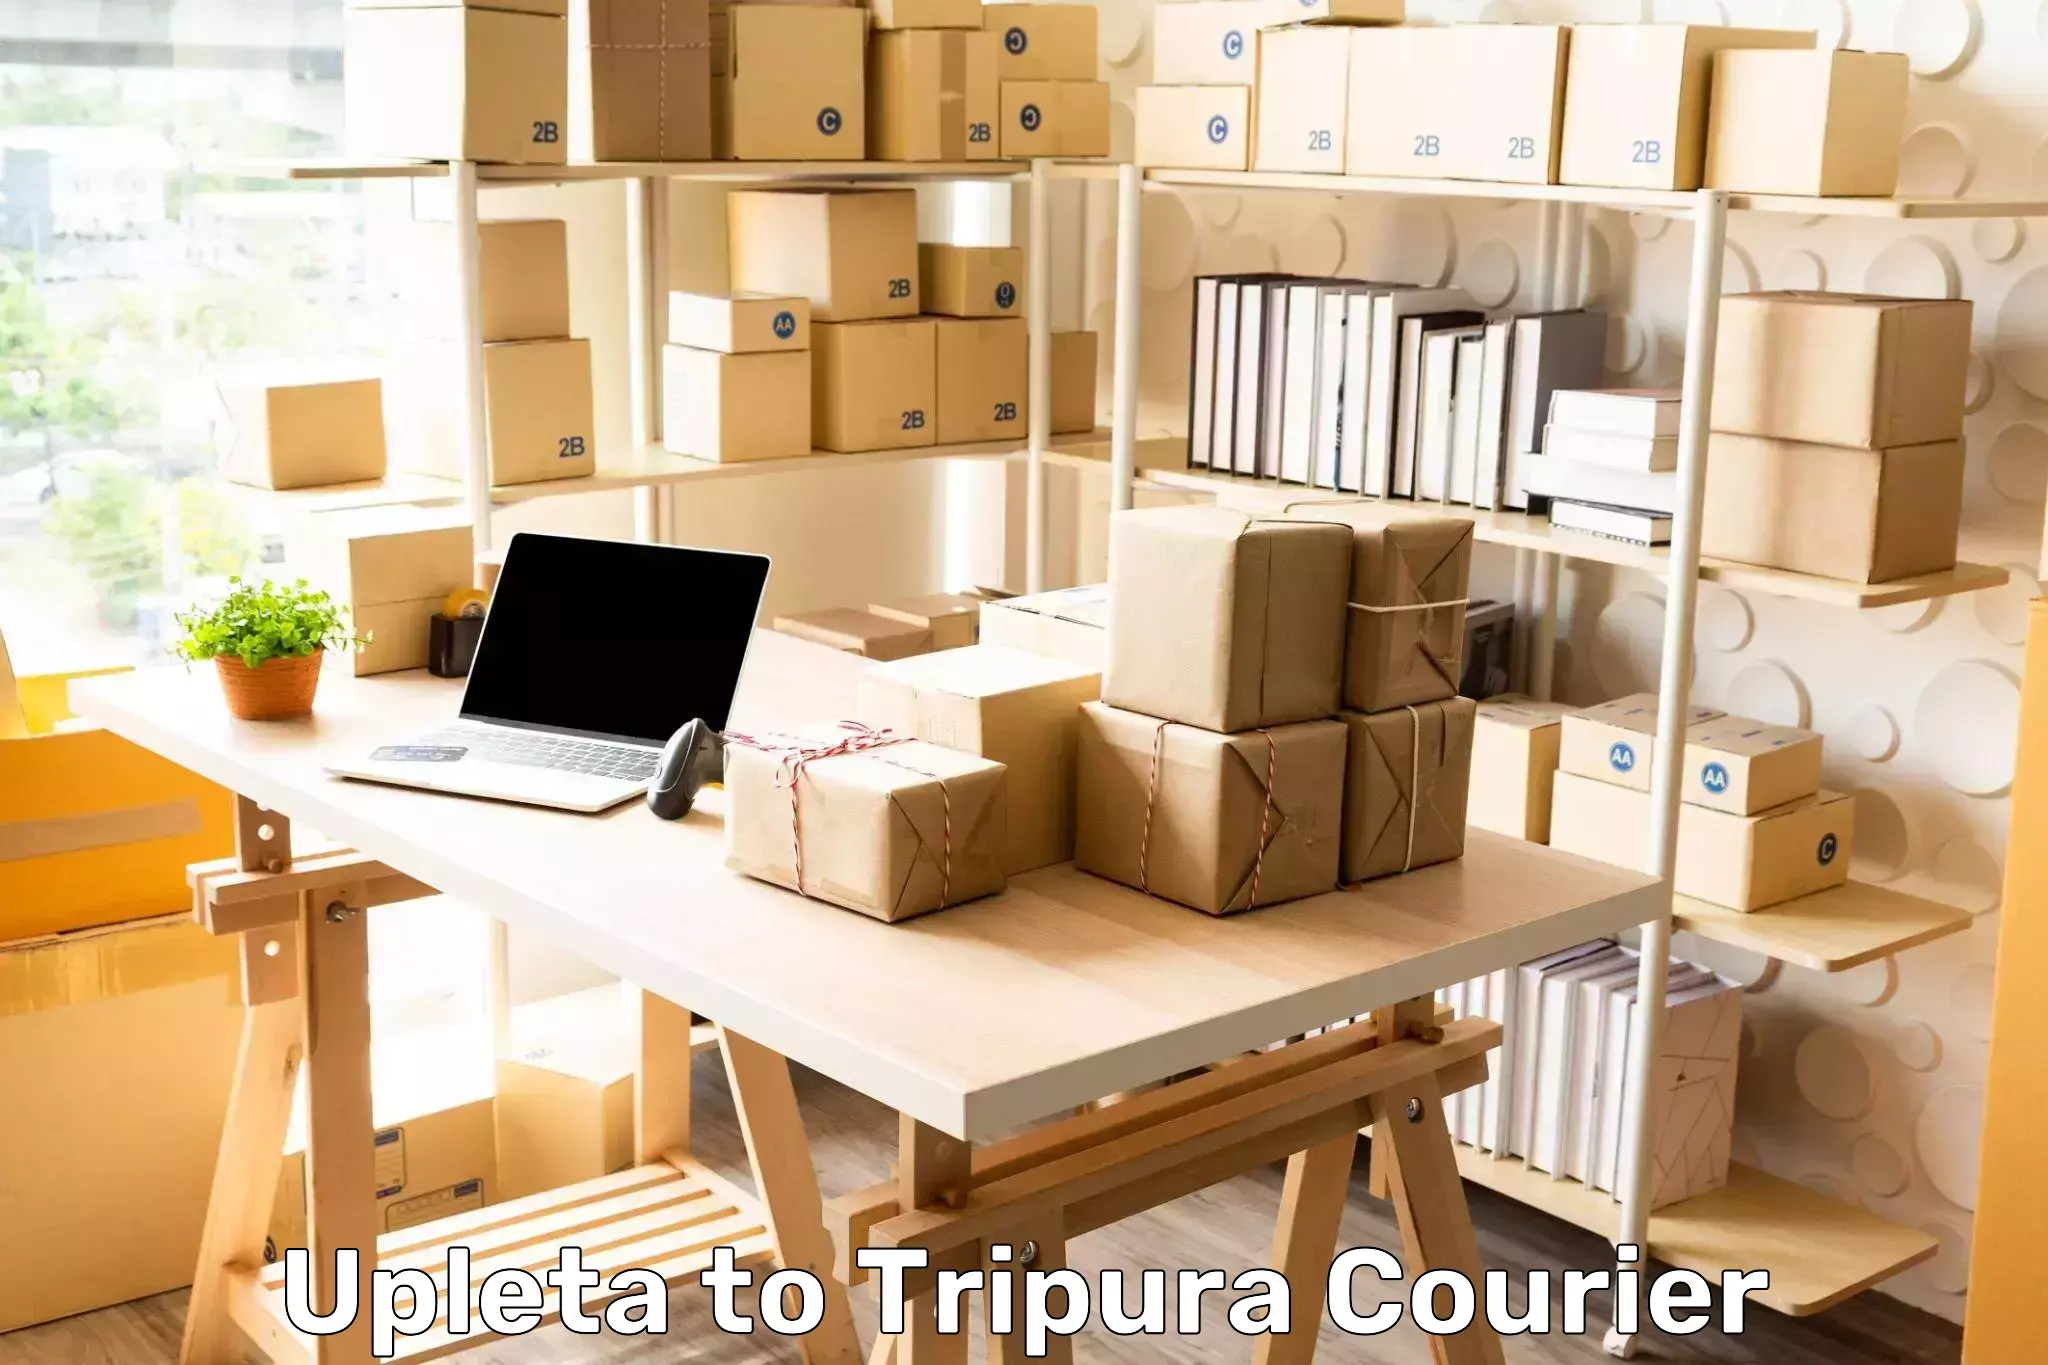 Urgent courier needs Upleta to Tripura